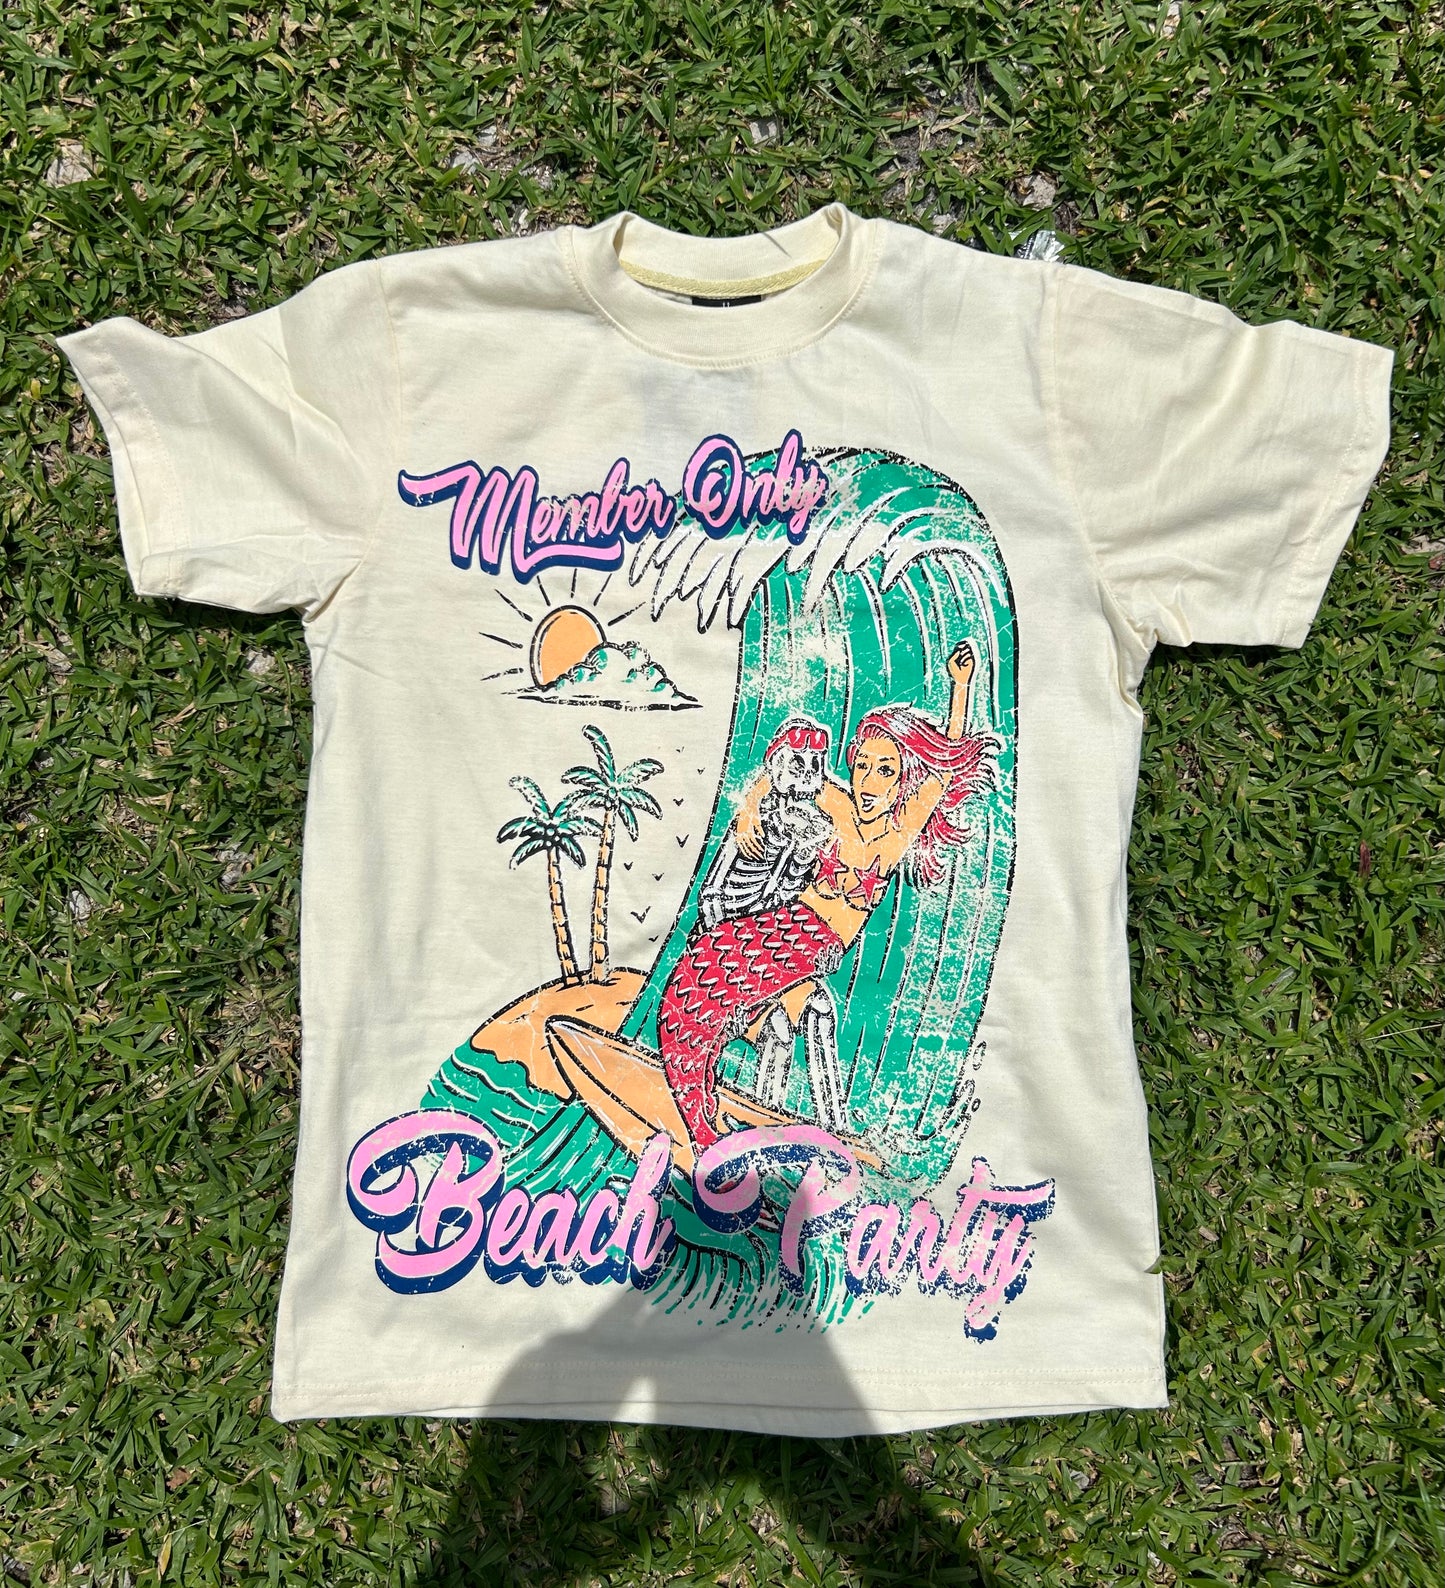 “Motion Beach” - T-shirt